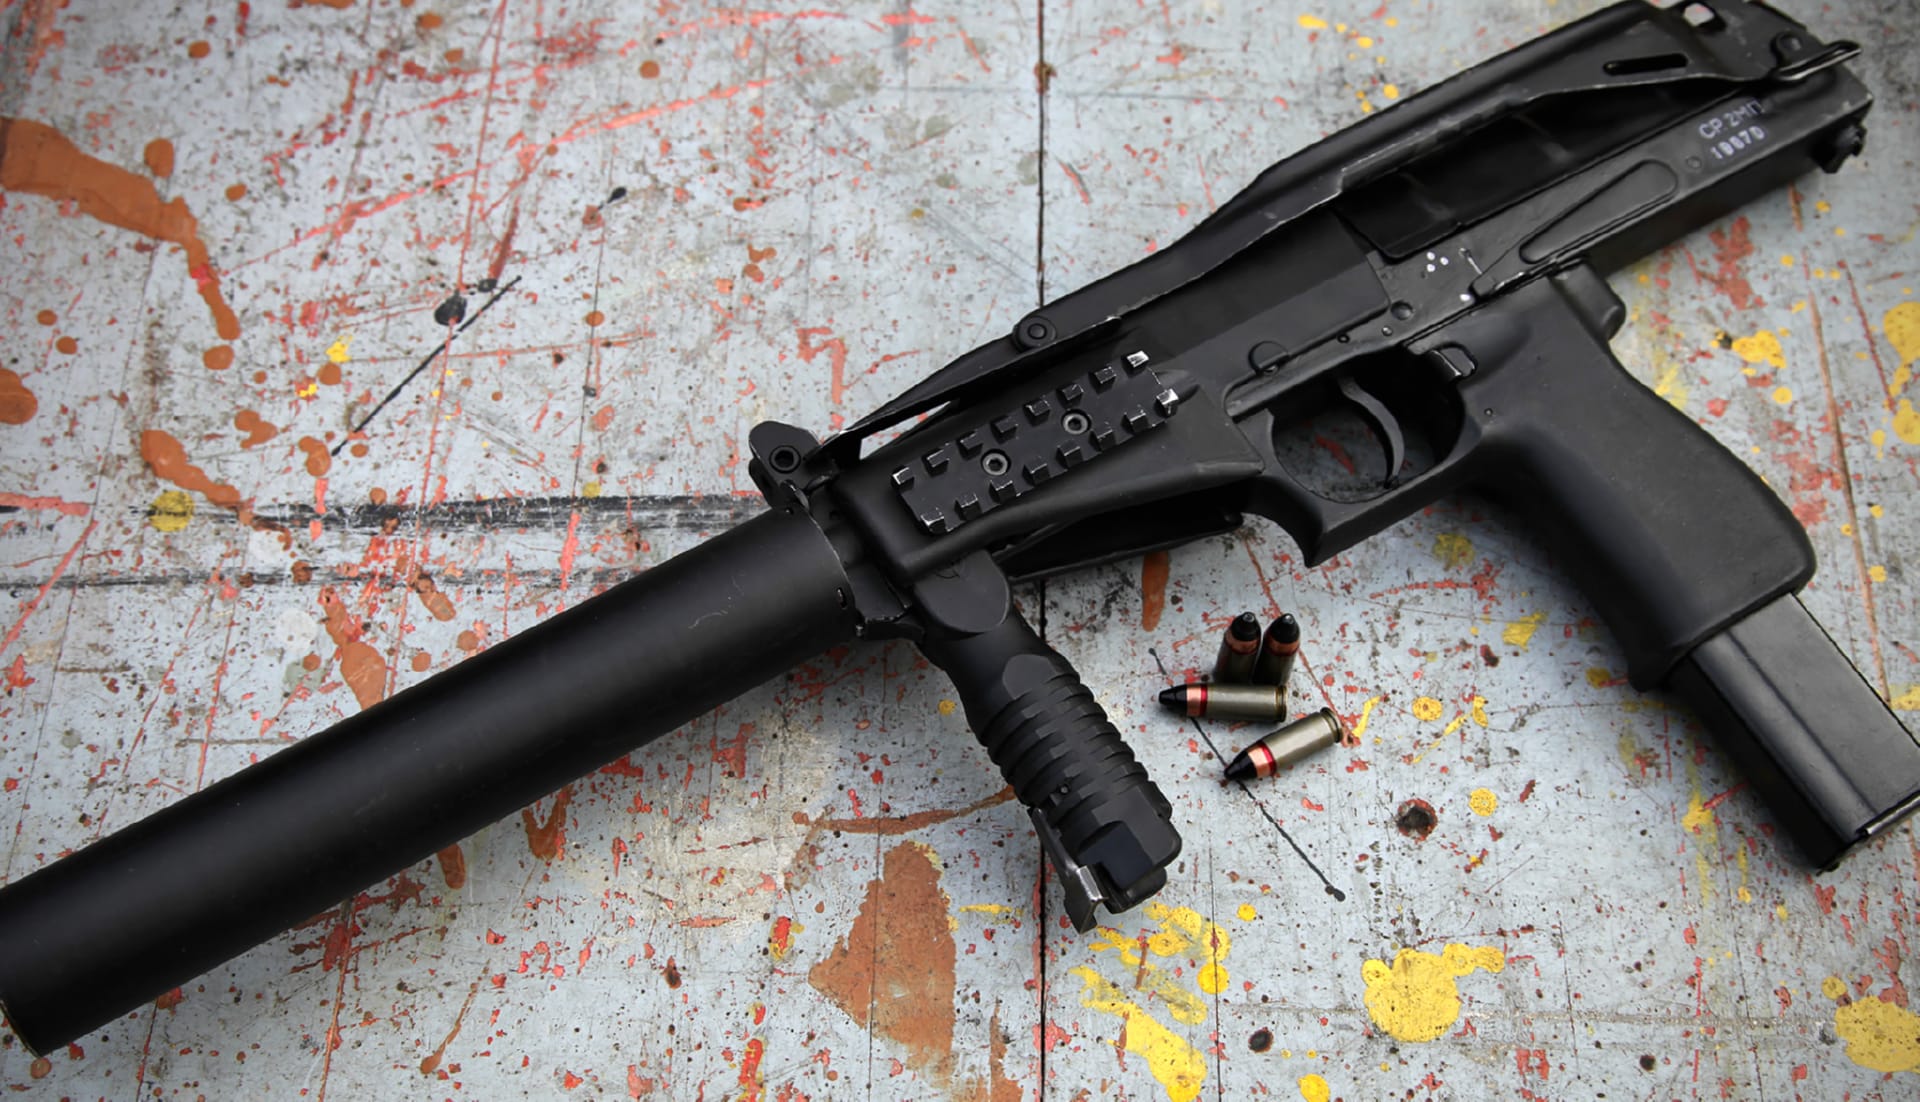 SR-2MP submachine gun at 1600 x 1200 size wallpapers HD quality